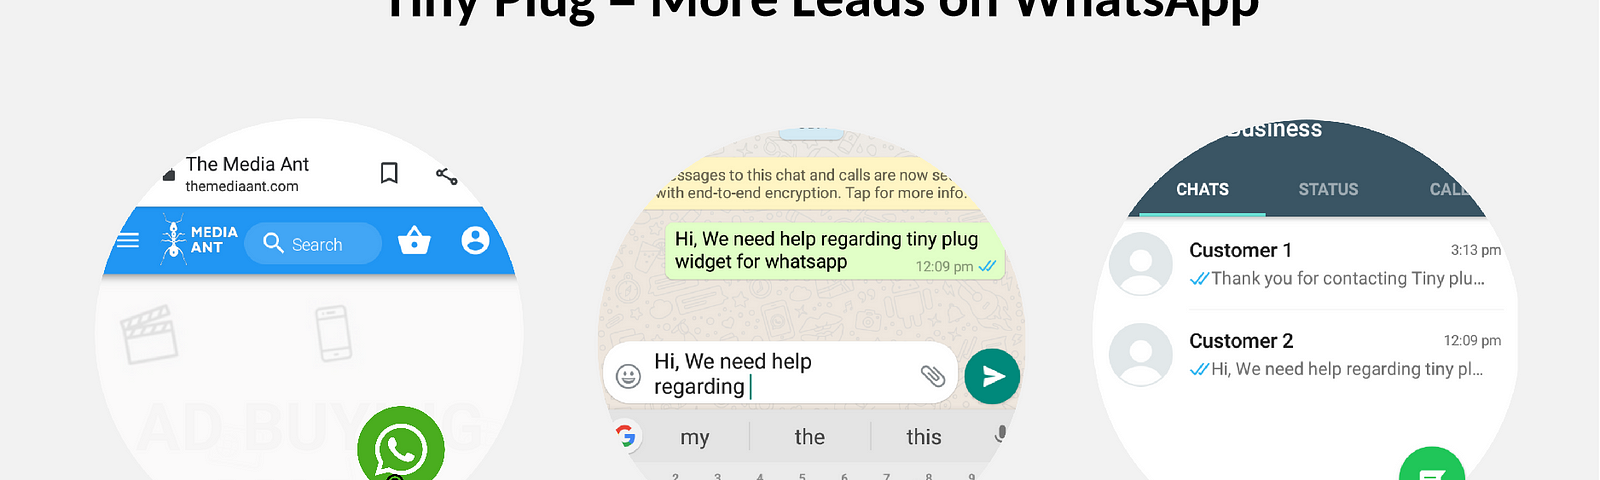 Tiny Plug= More Leads on WhatsApp